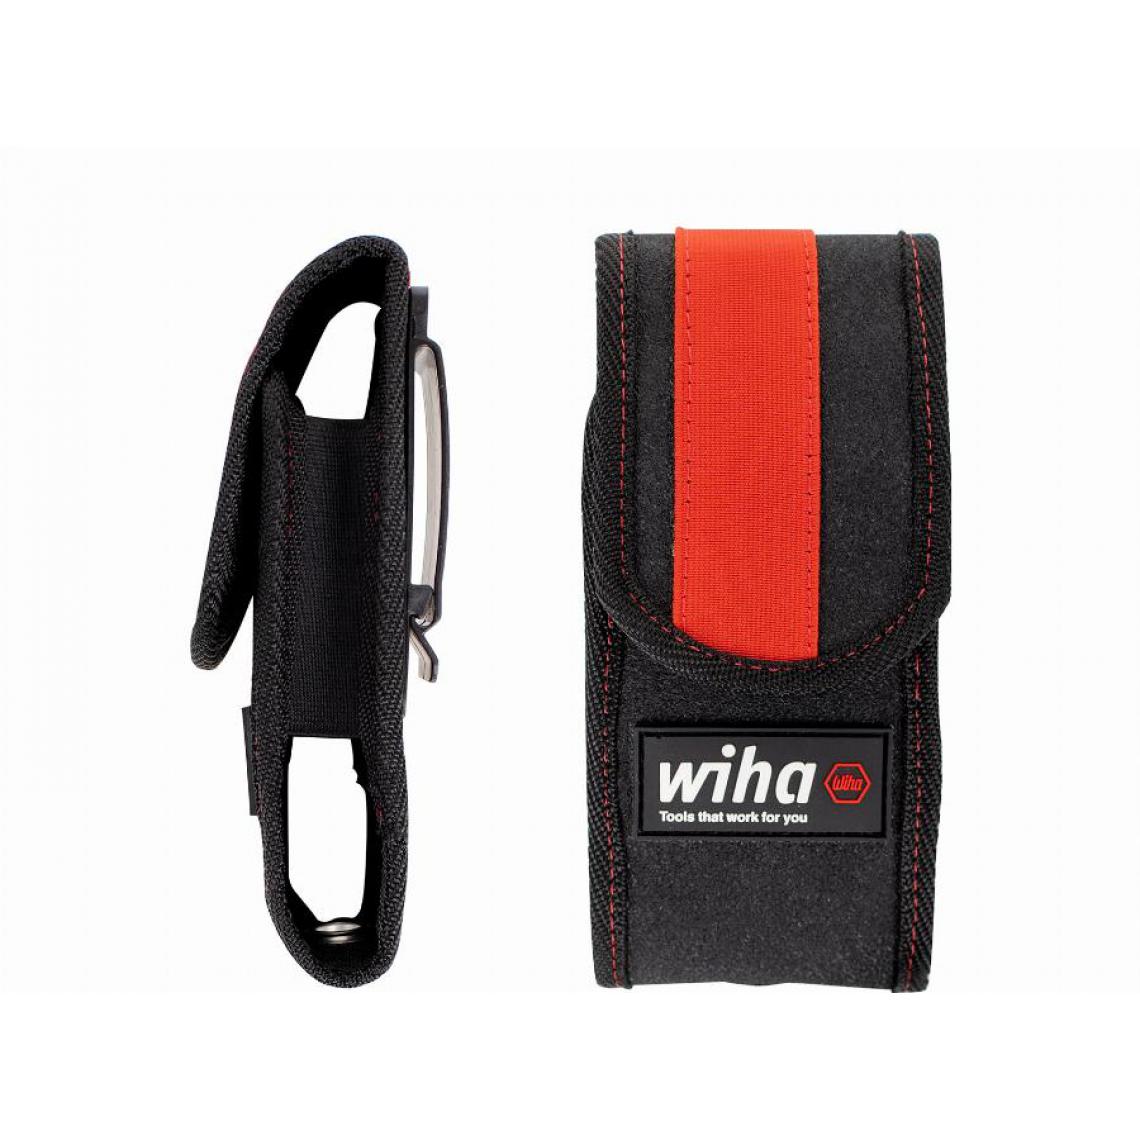 Wiha - Pochette de ceinture pour speedE WIHA - 44367 - Tournevis